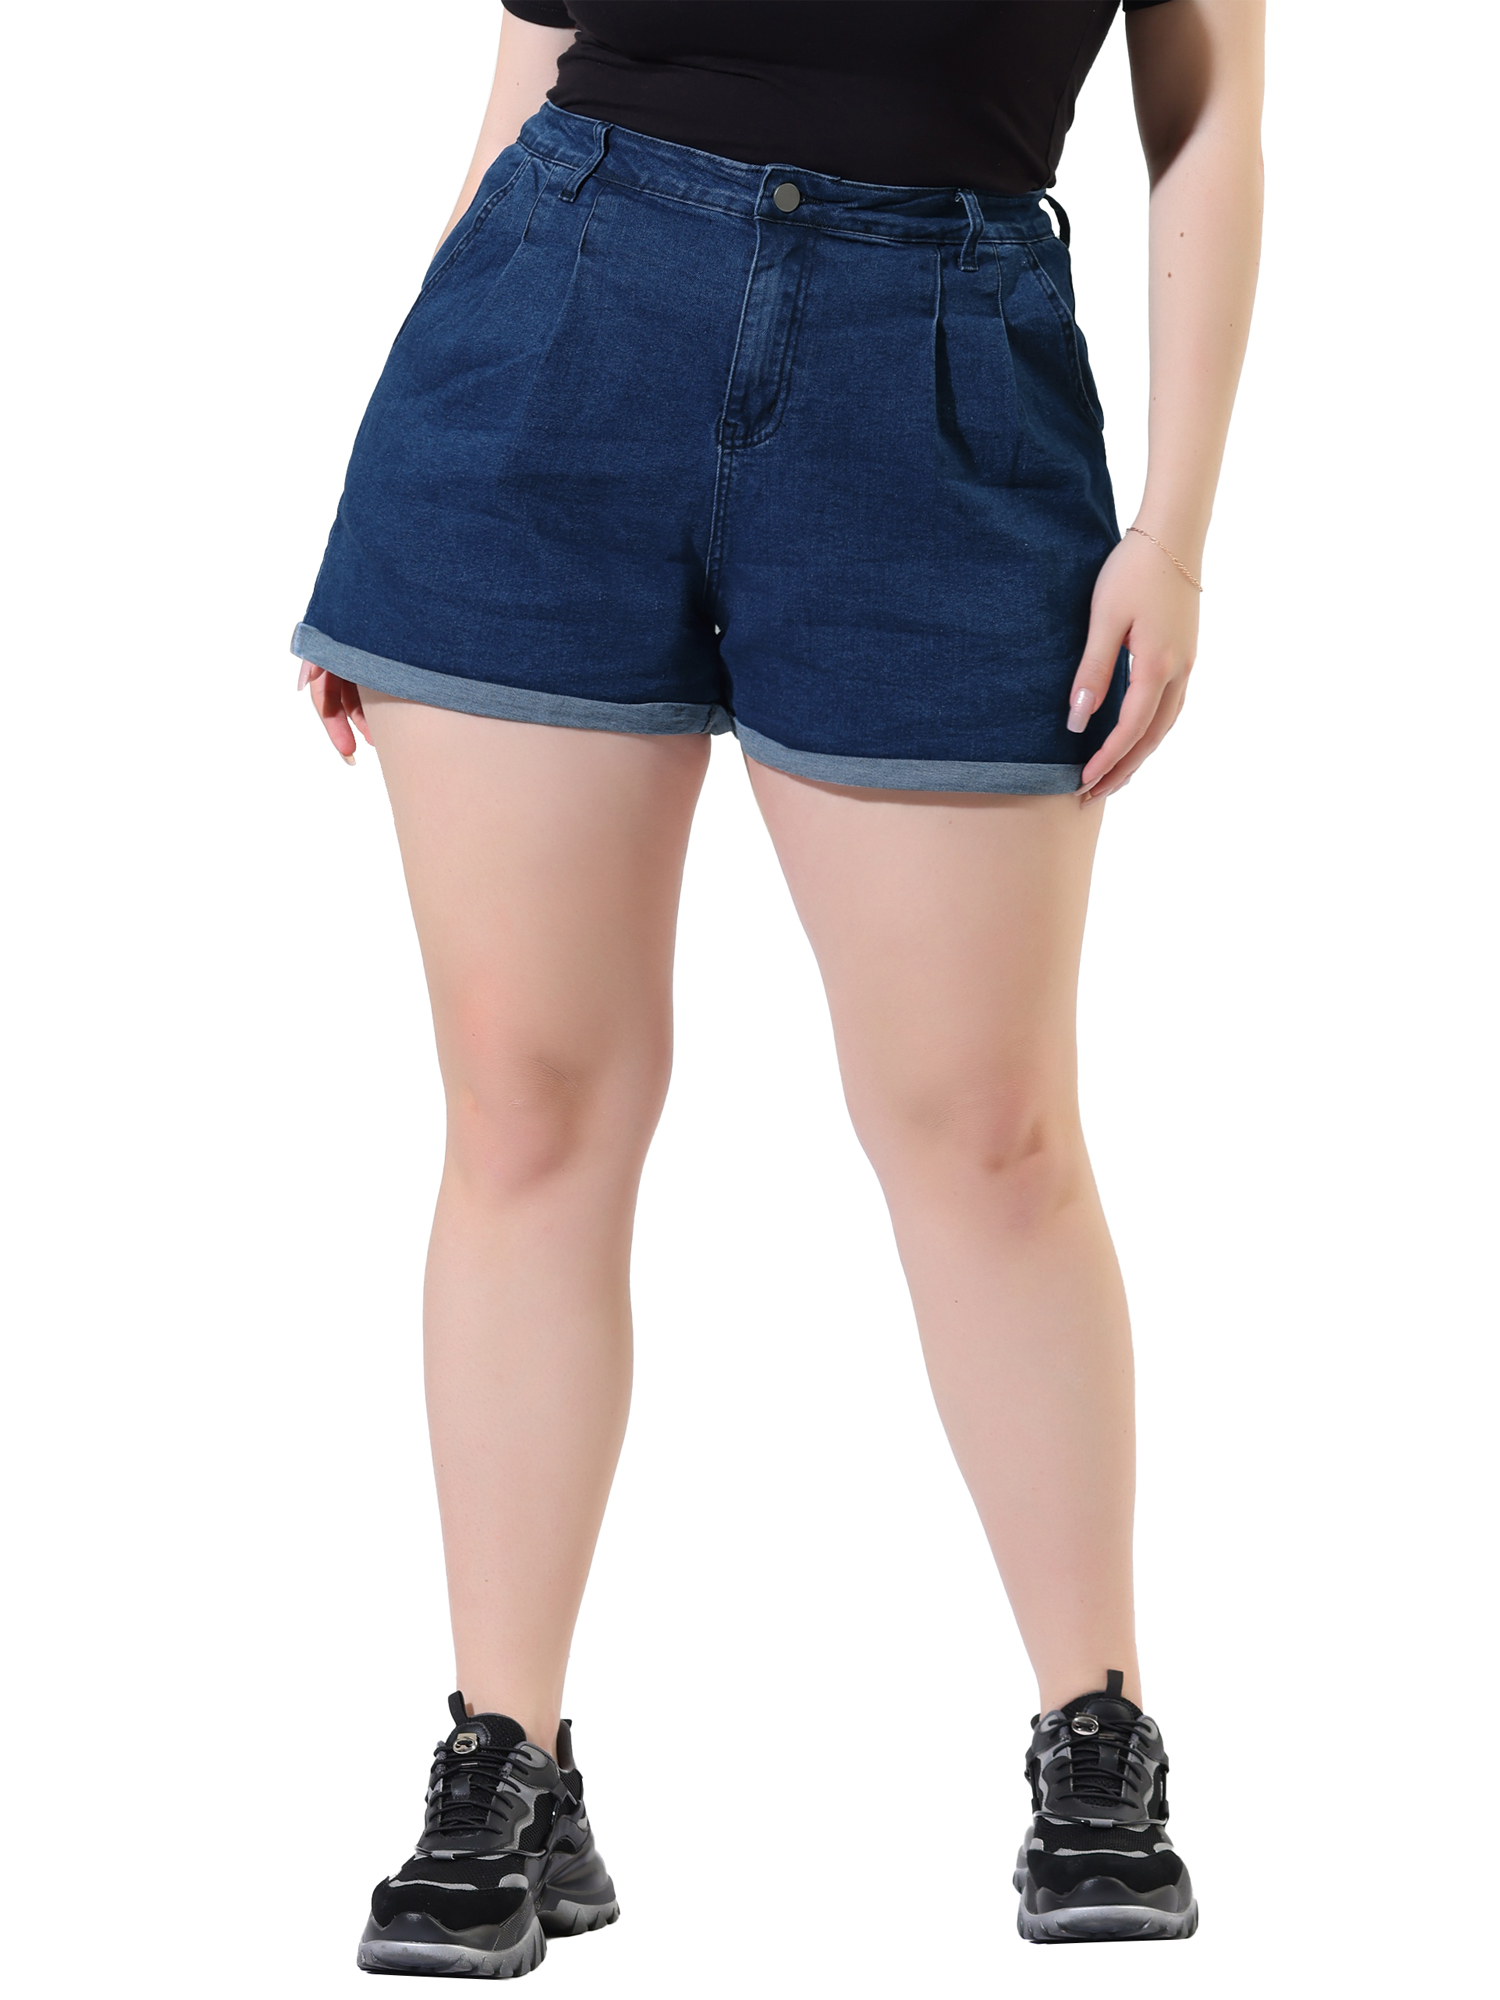 Unique Bargains Agnes Orinda Plus Size Denim Shorts for Women High Waisted Folded Hem Jean Shorts with Pockets